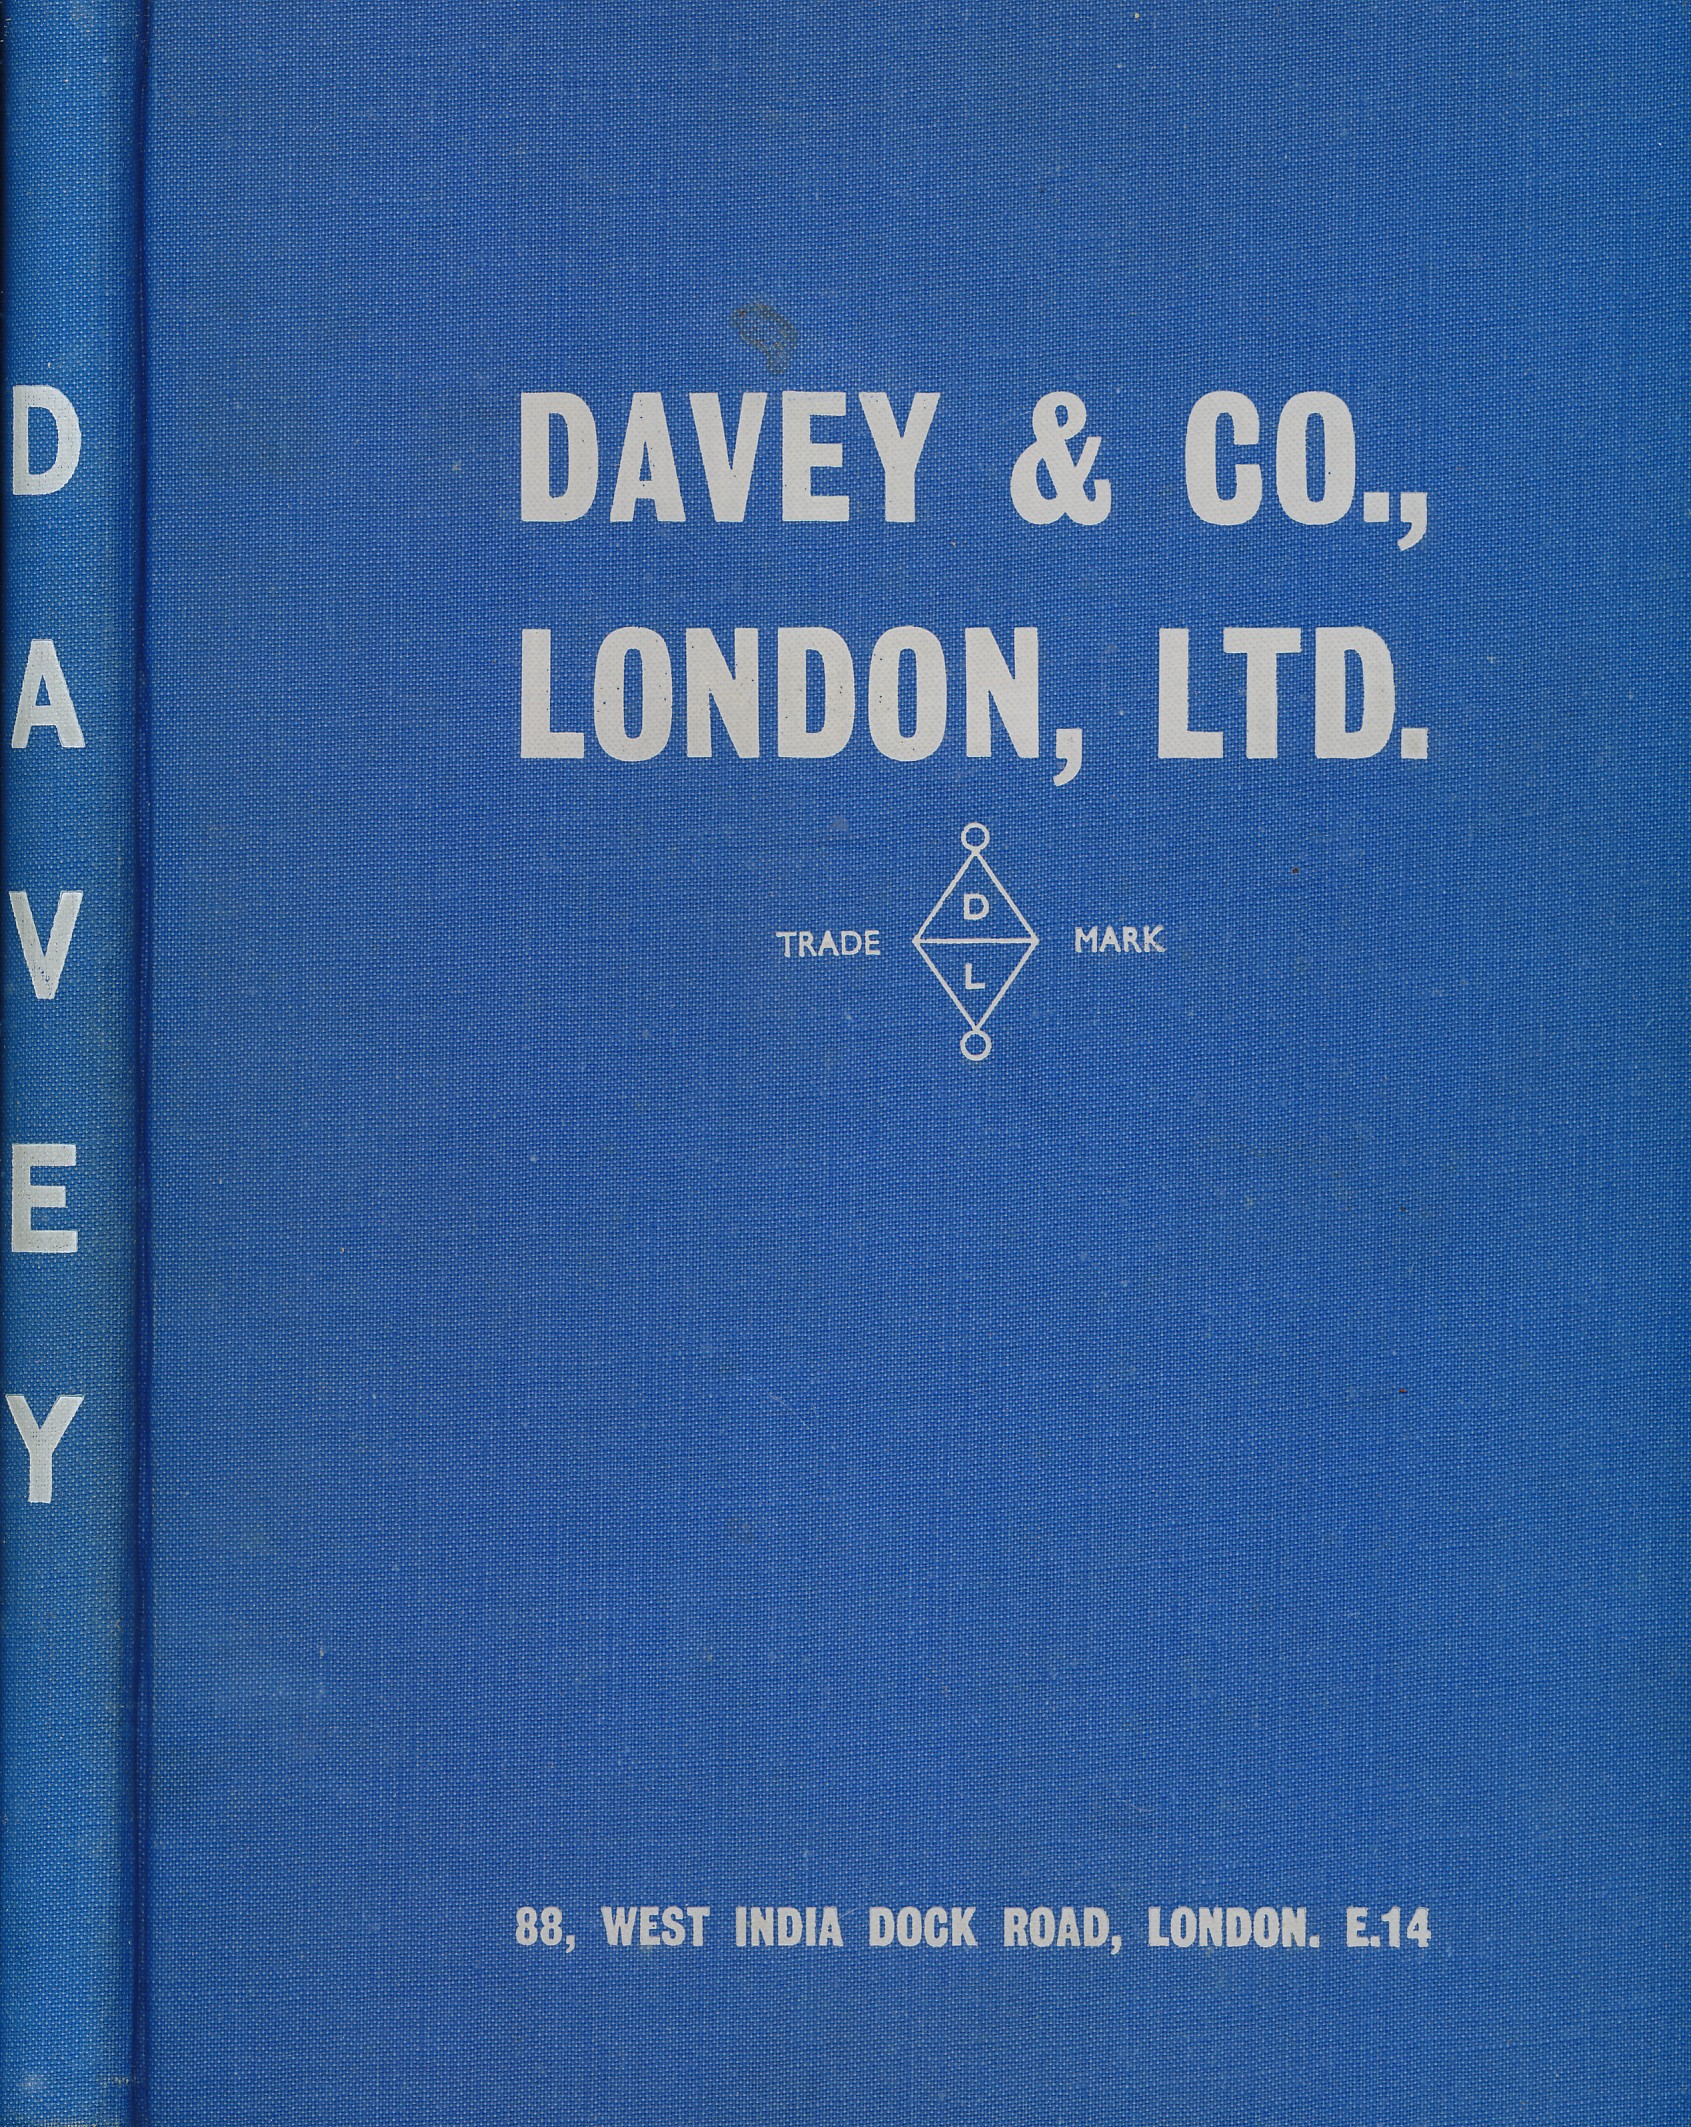 Davey & Co., London Ltd. Catalogue No 10/61